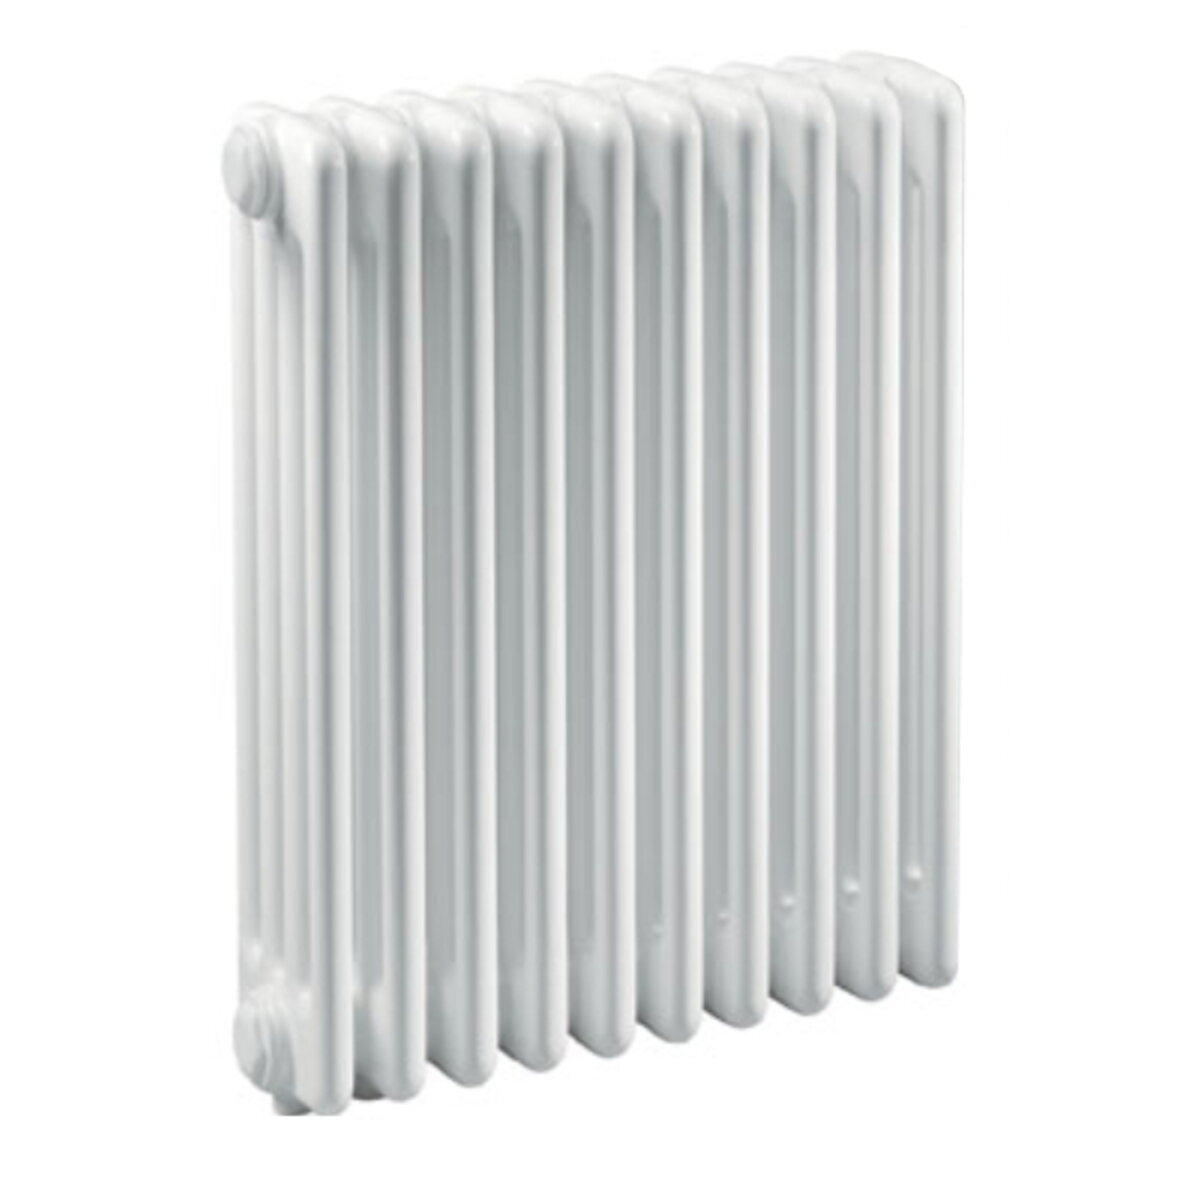 Ercos Comby steel column radiator 10 elements 3 columns center distance 1735 mm